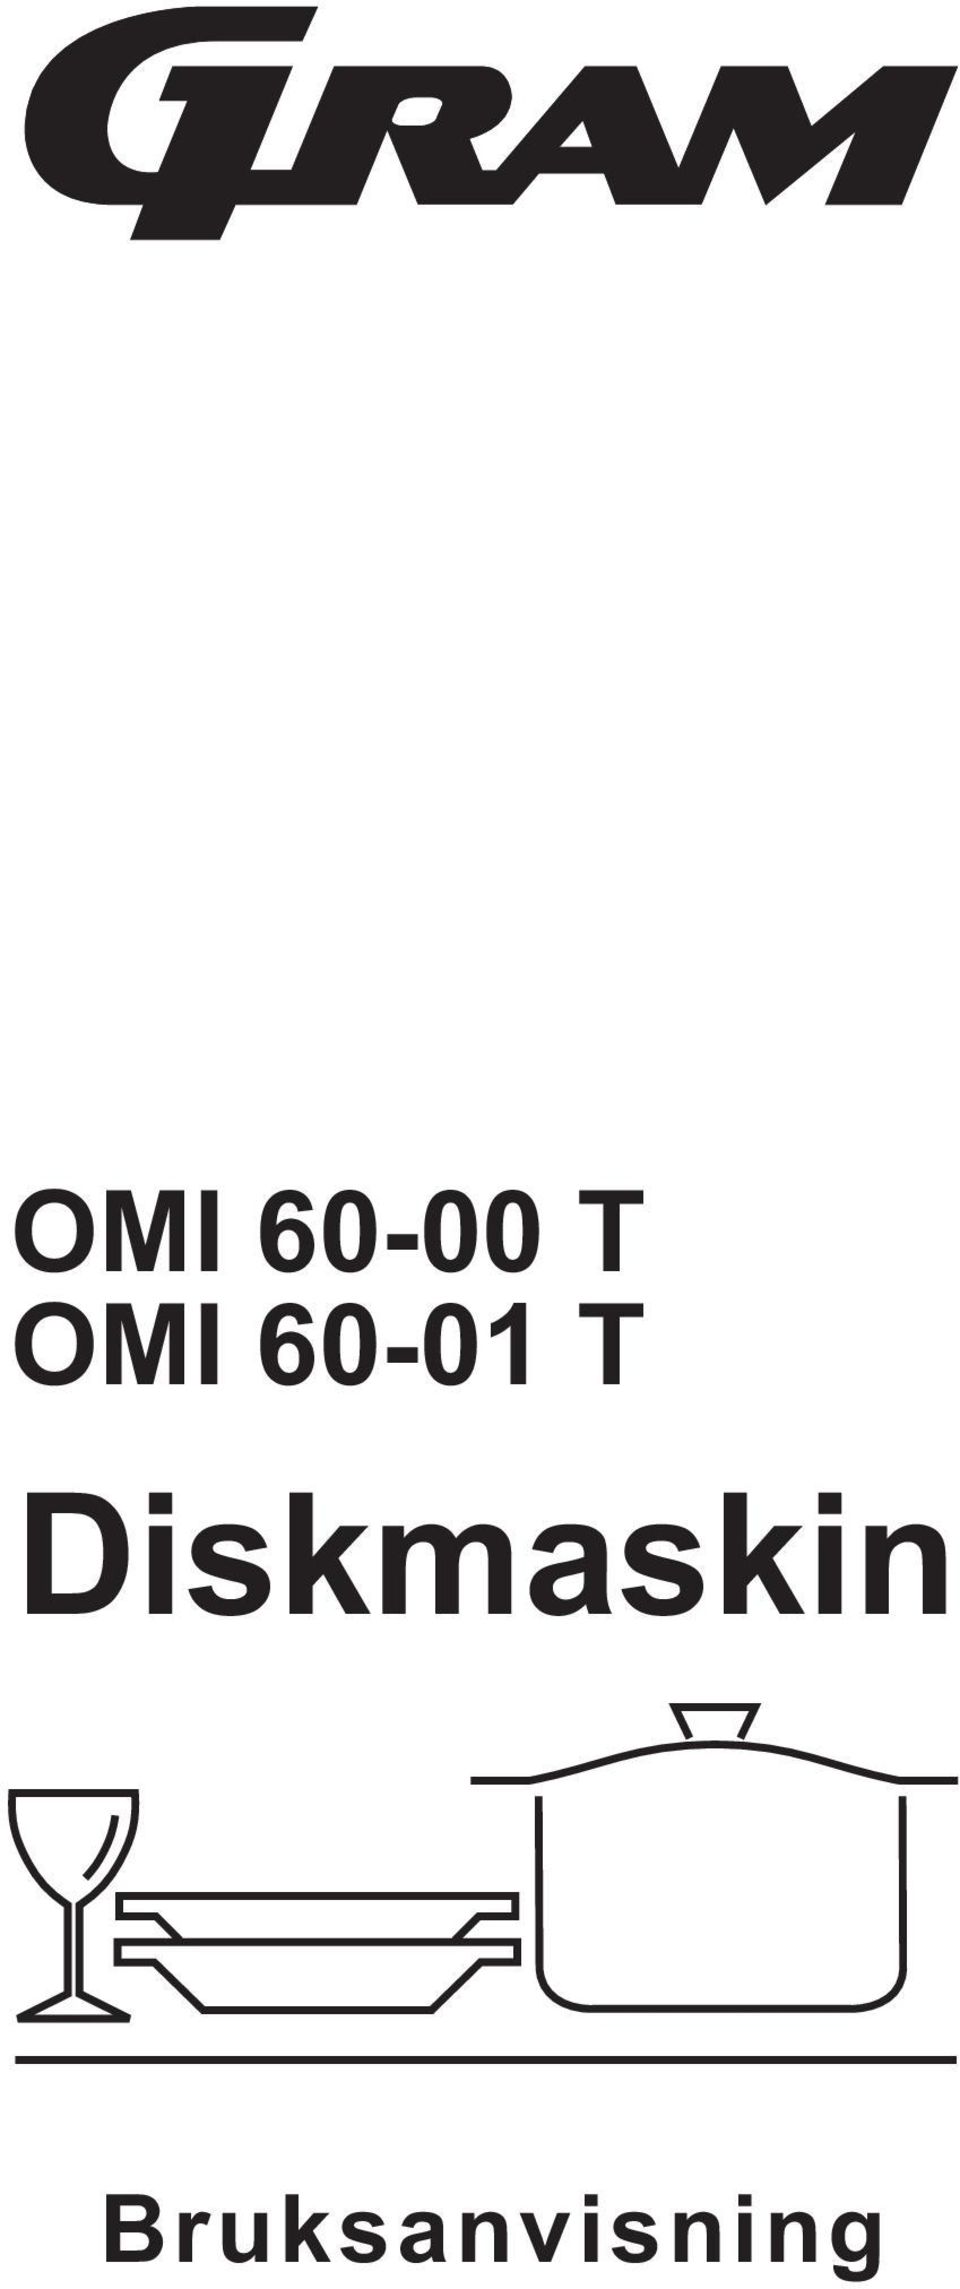 Diskmaskin